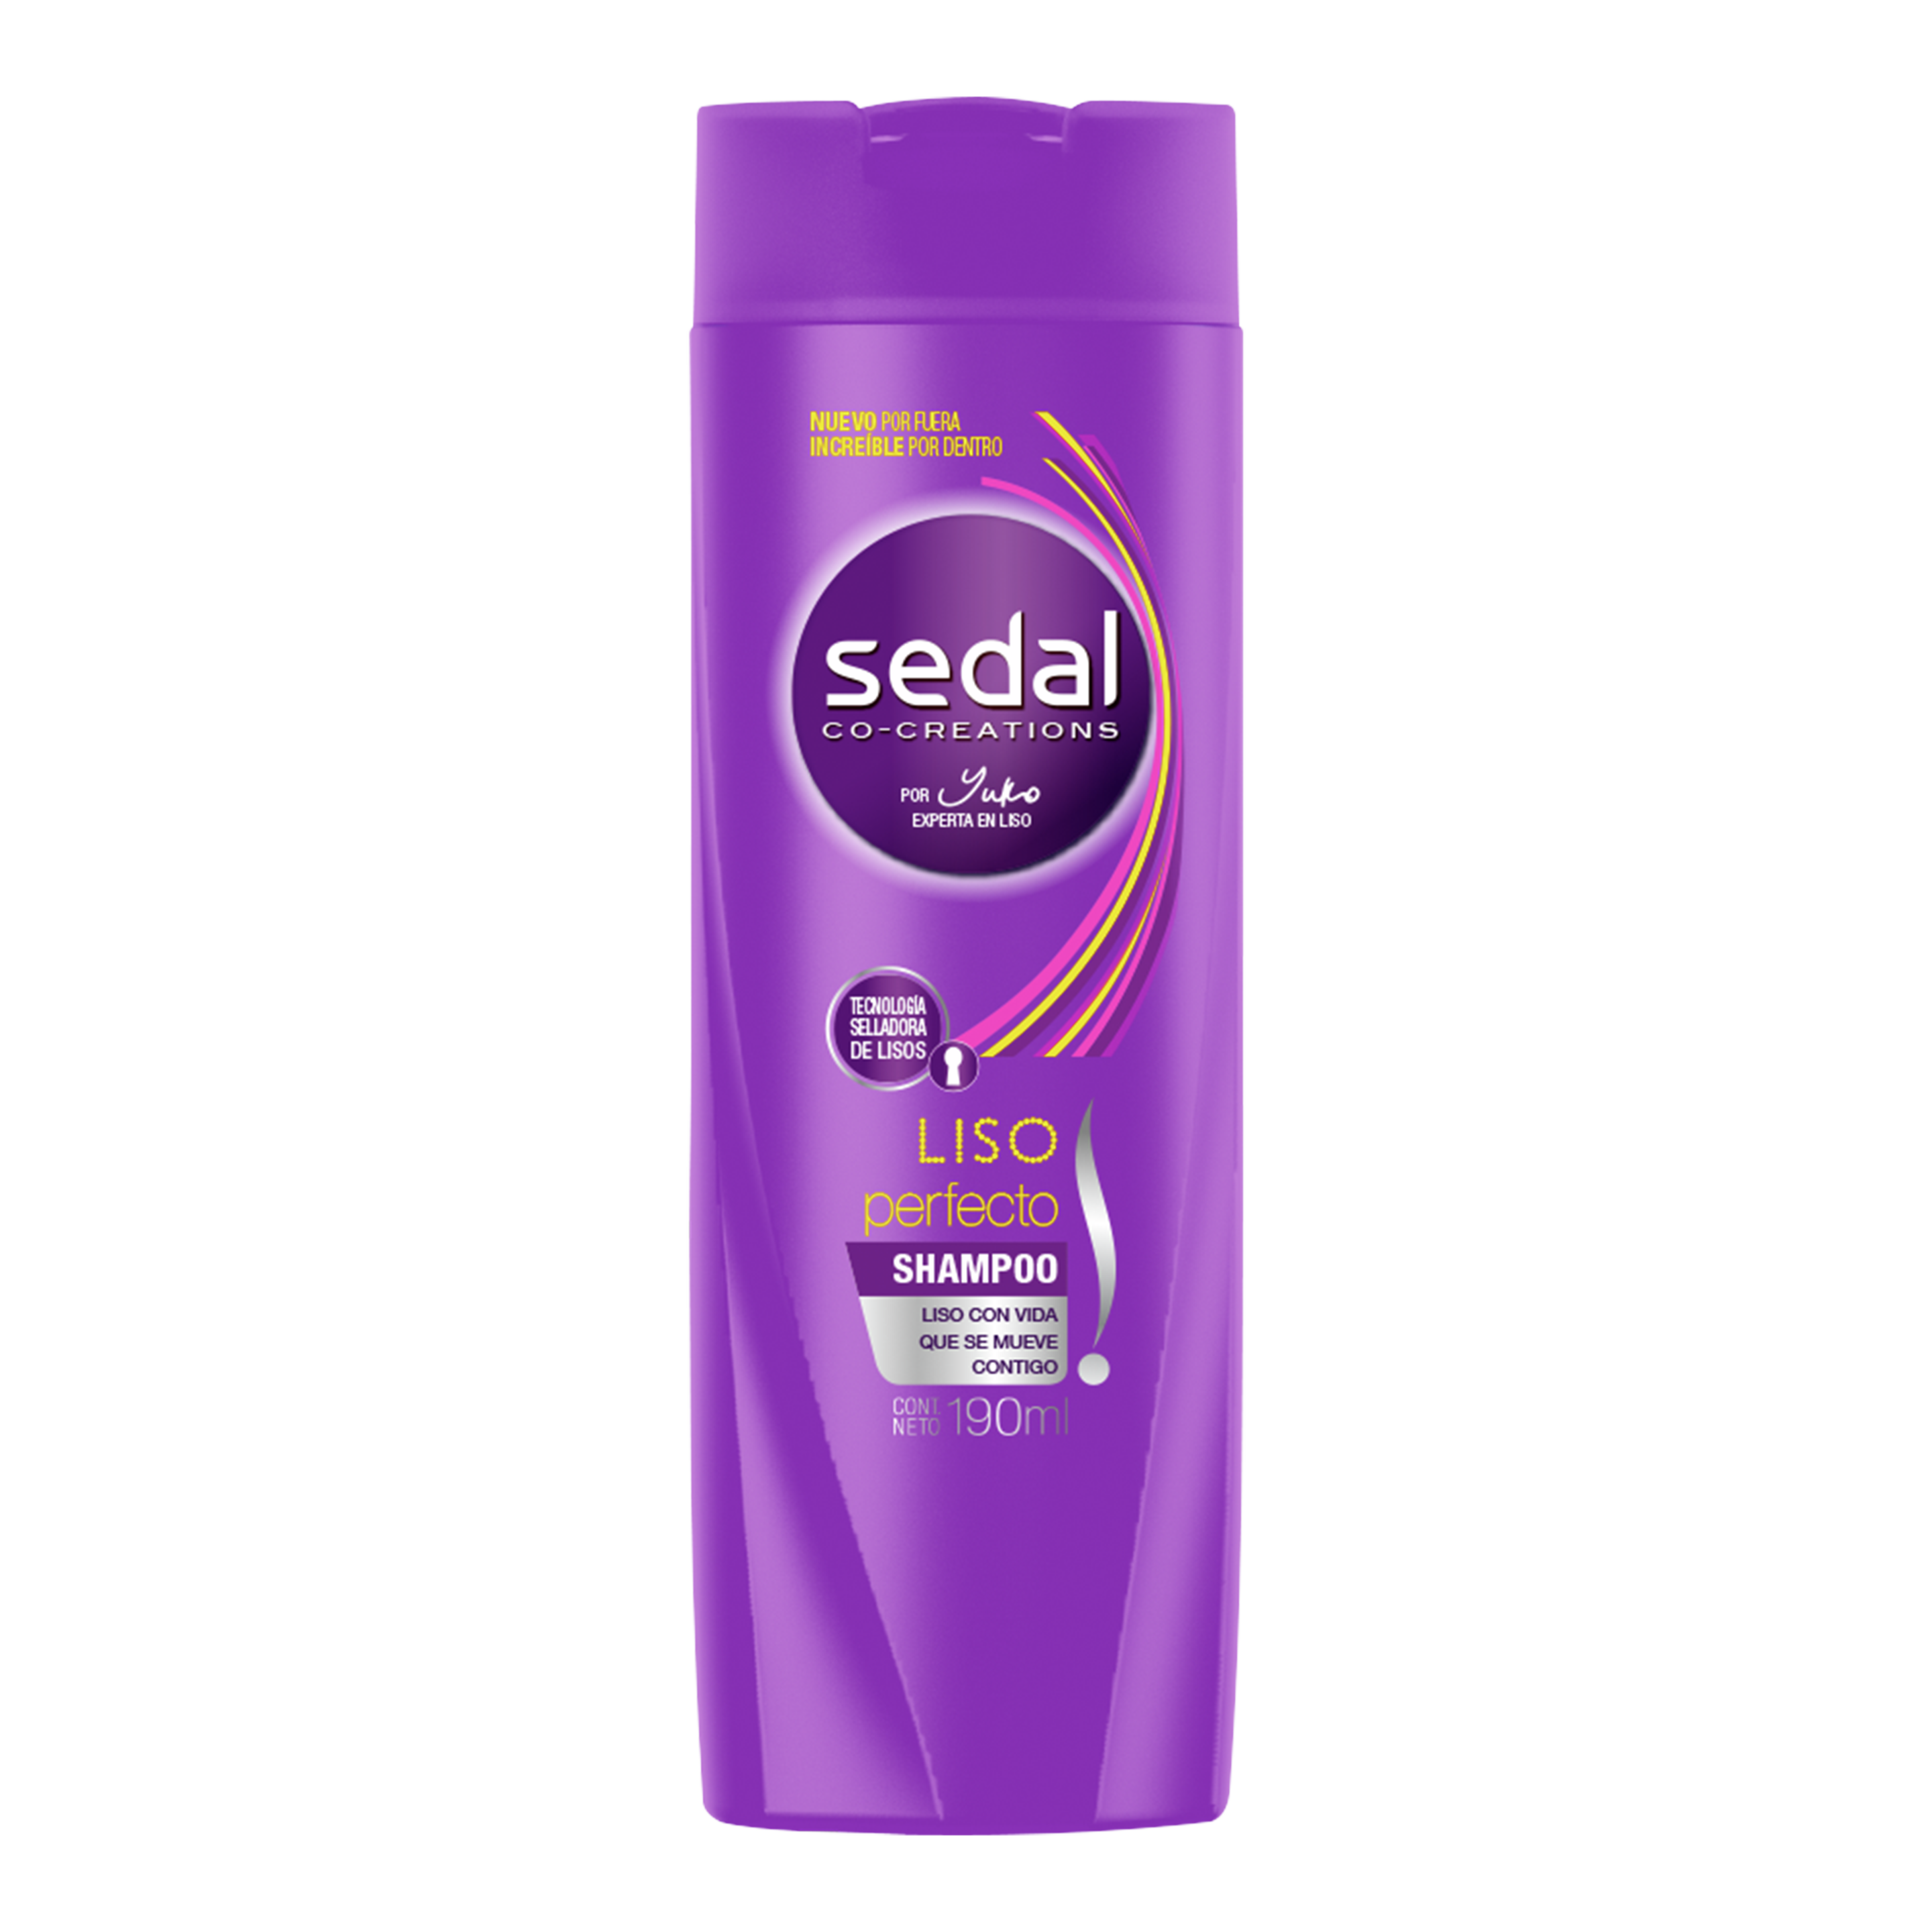 Imagen al frente del paquete Sedal Shampoo Liso Perfecto 190 ml